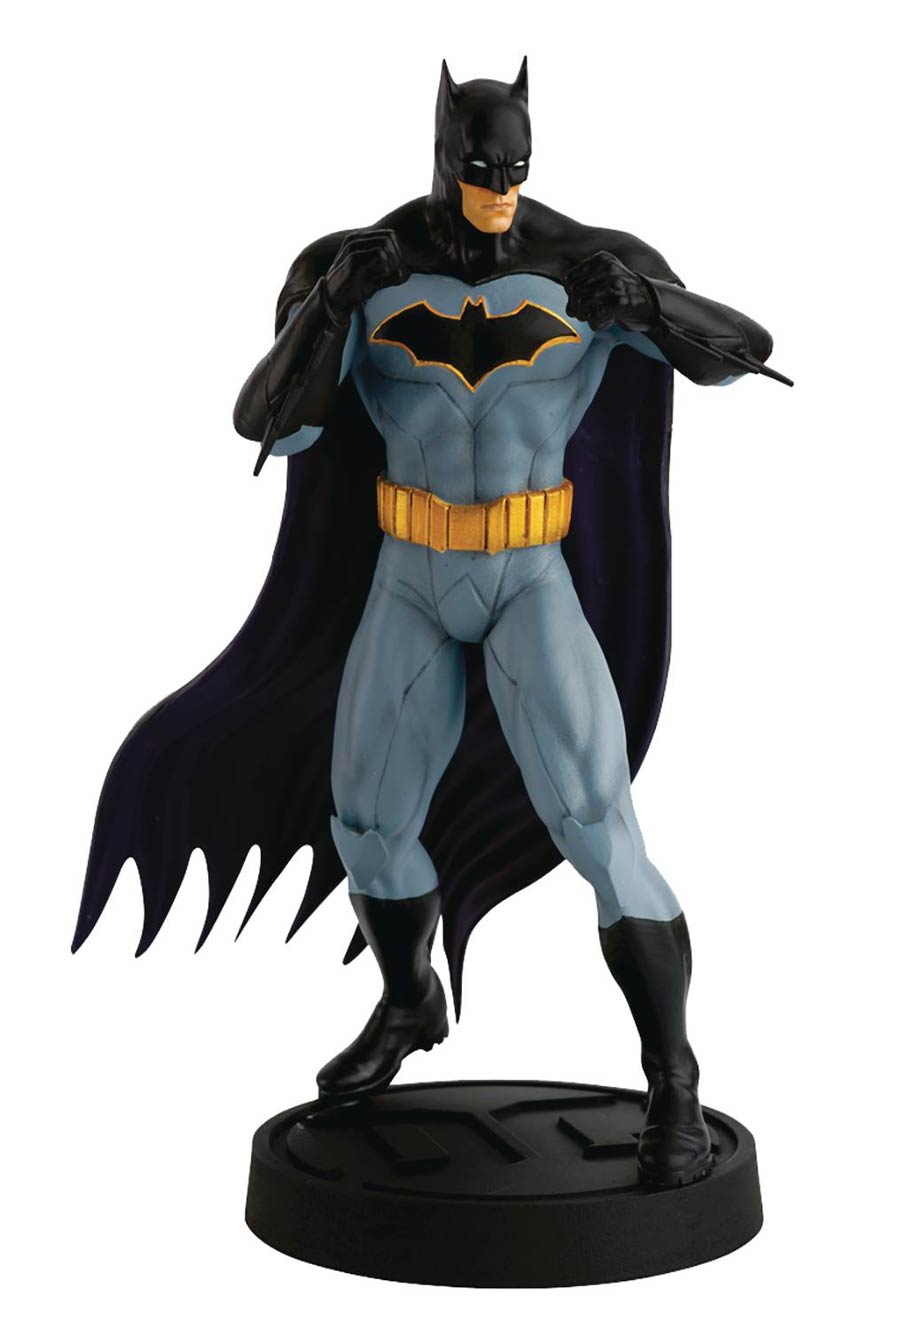 DC All-Stars Figurine Collection #1 Batman The Dark Knight